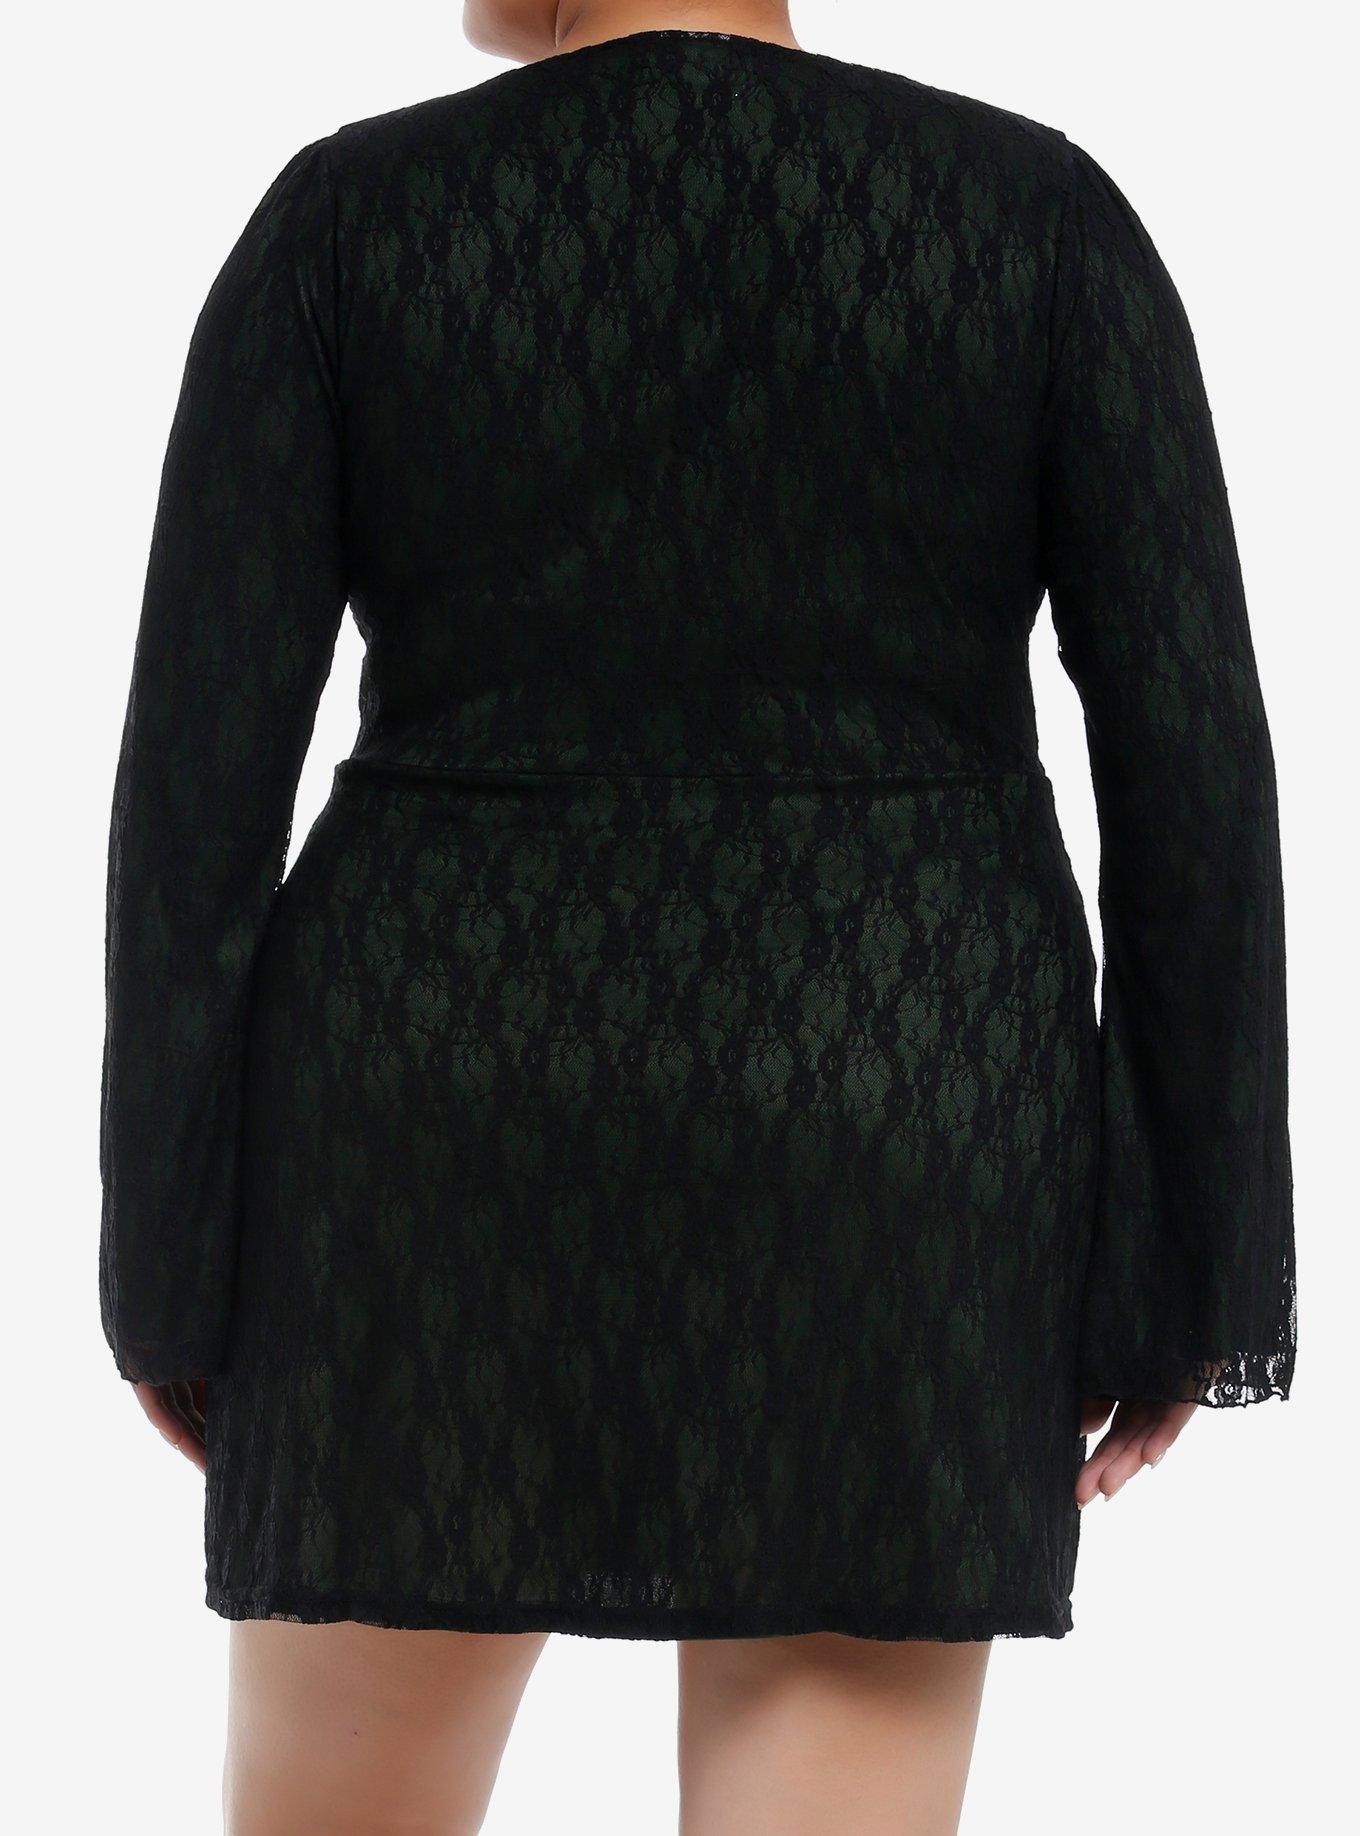 Black & Green Lace Bell Sleeve Dress Plus Size, KHAKI, alternate